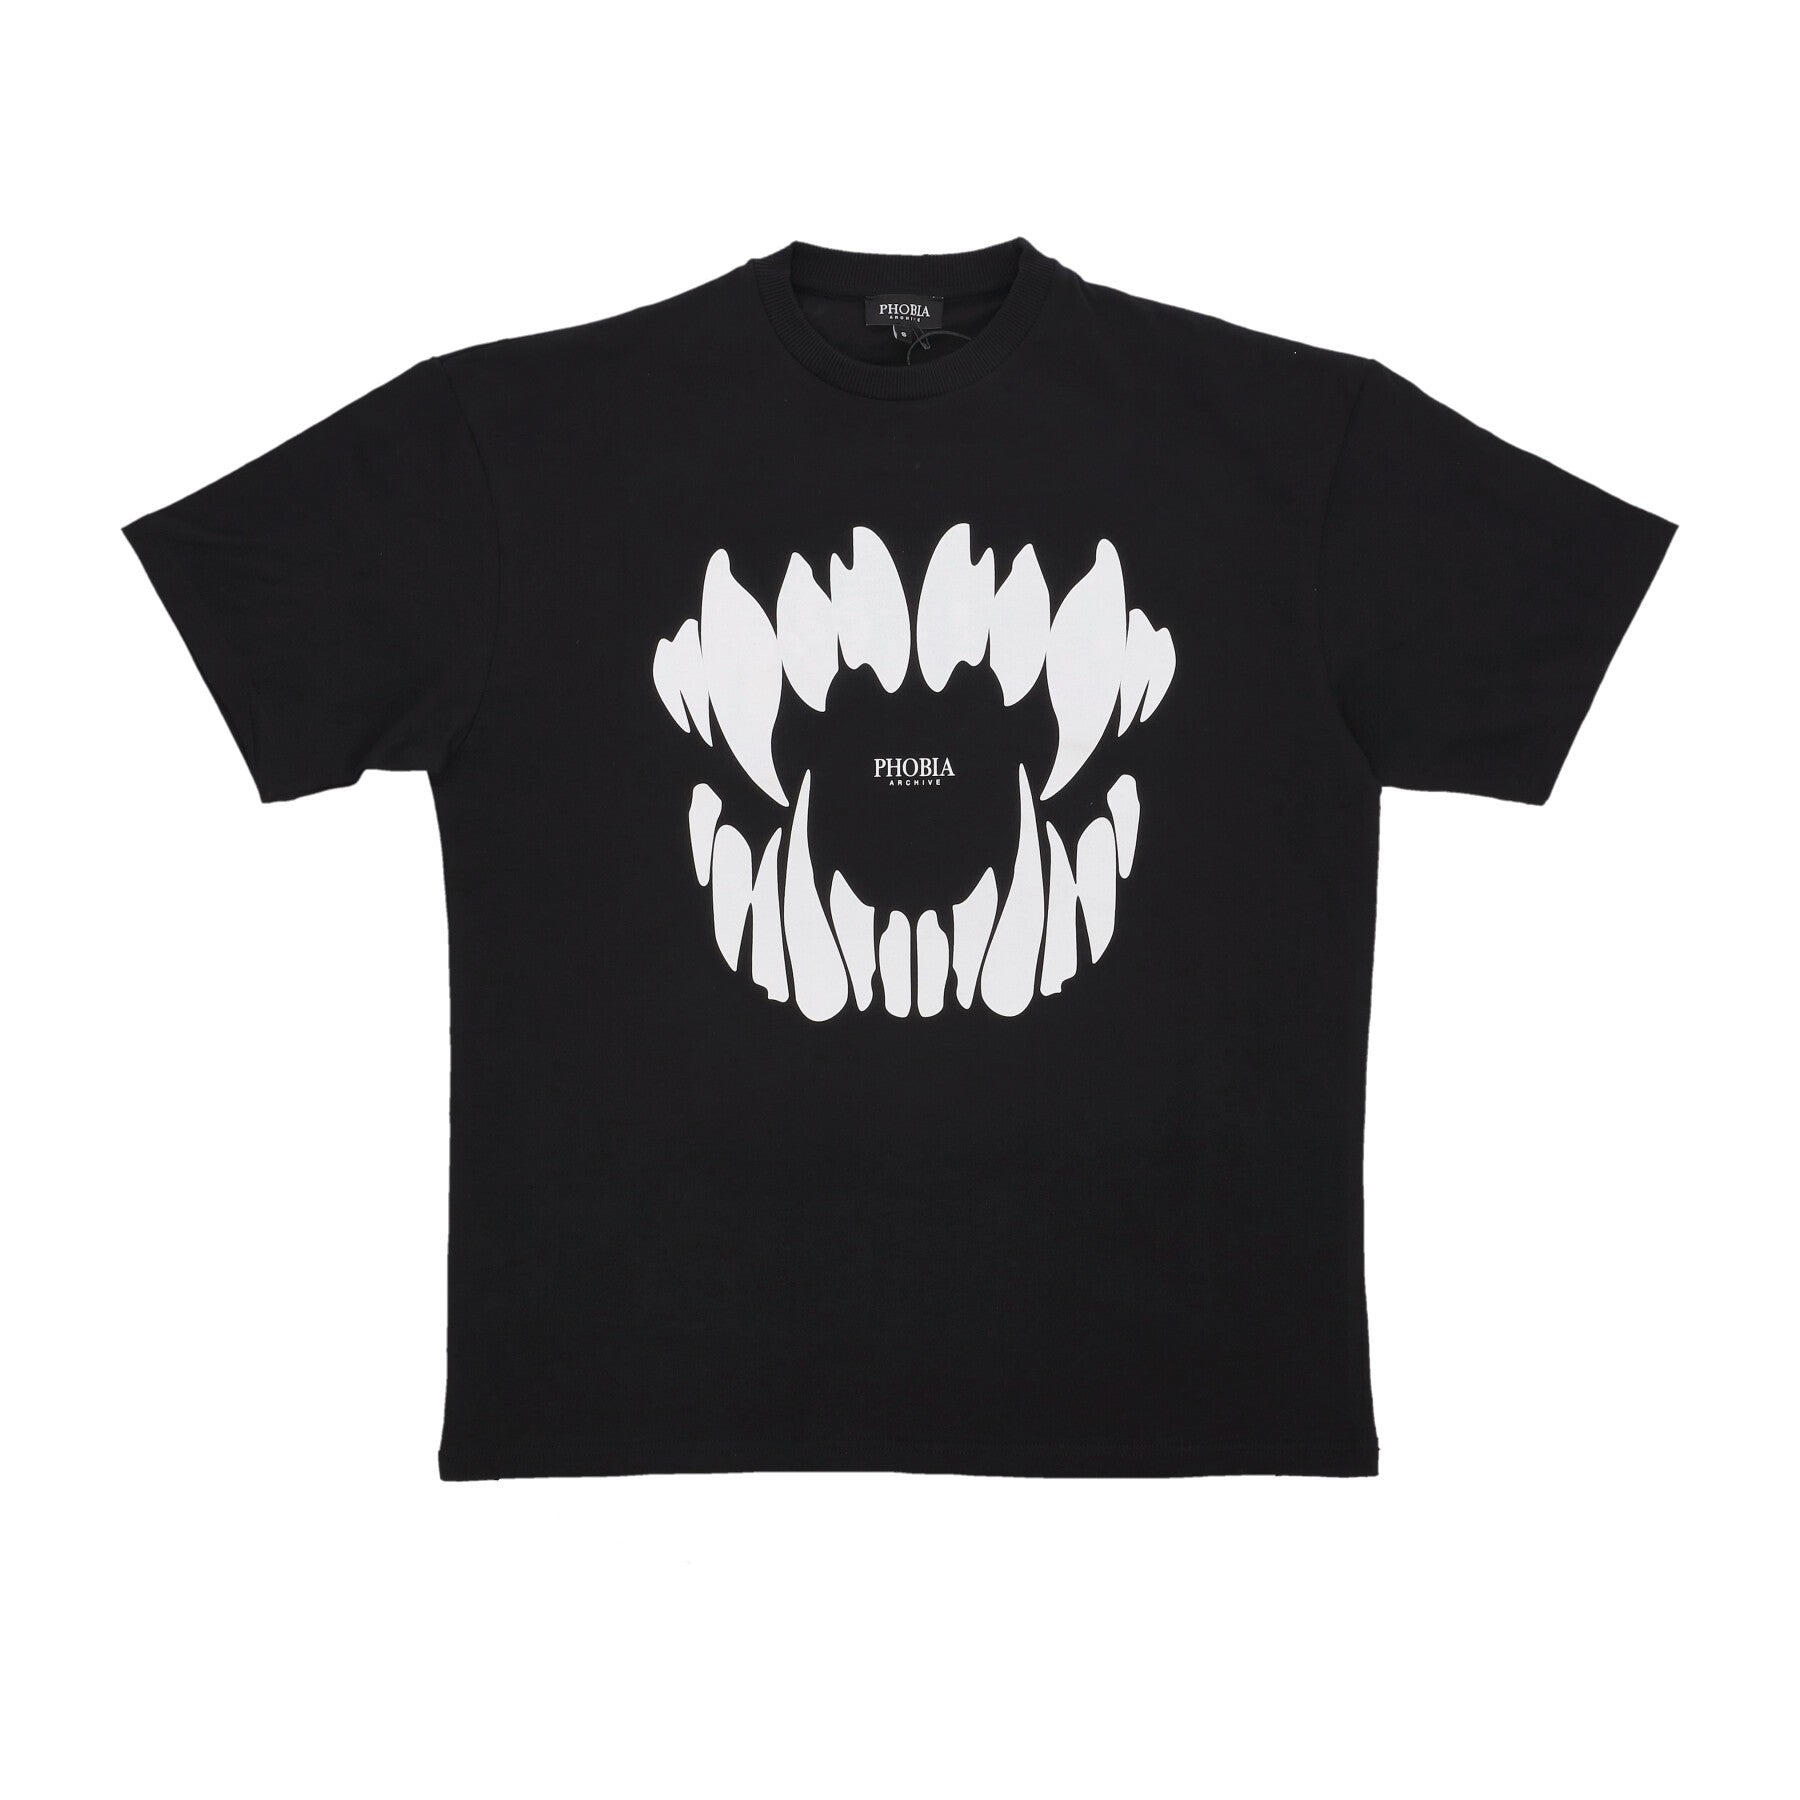 Mouth Print Tee Men's T-Shirt Black/white